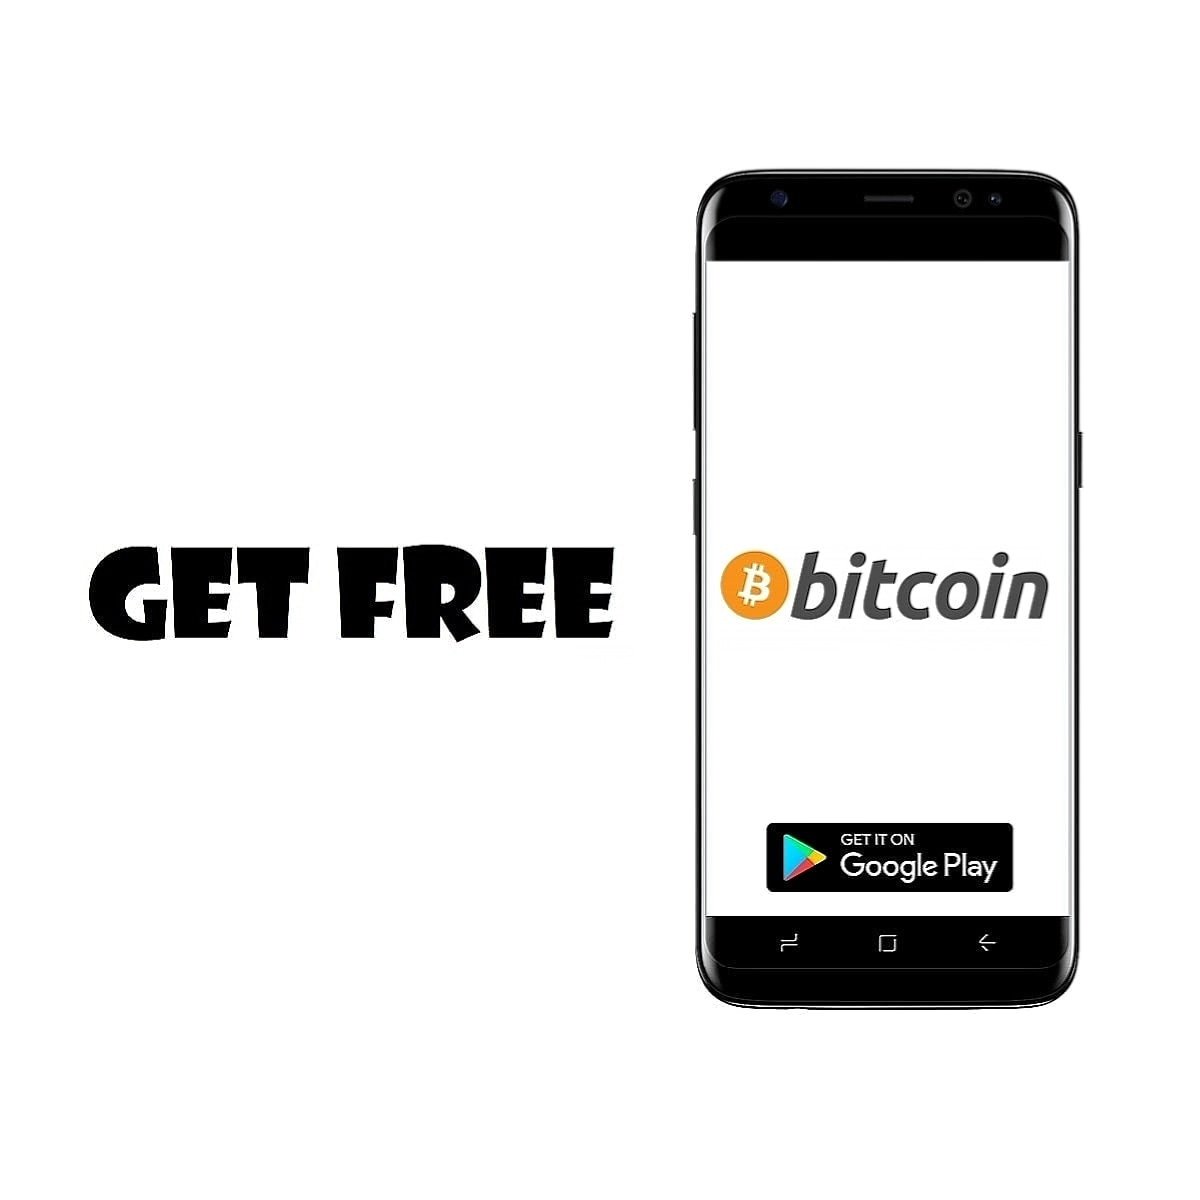 Claim Btc Every 15 Minutes Free Bitcoin Twitter - 